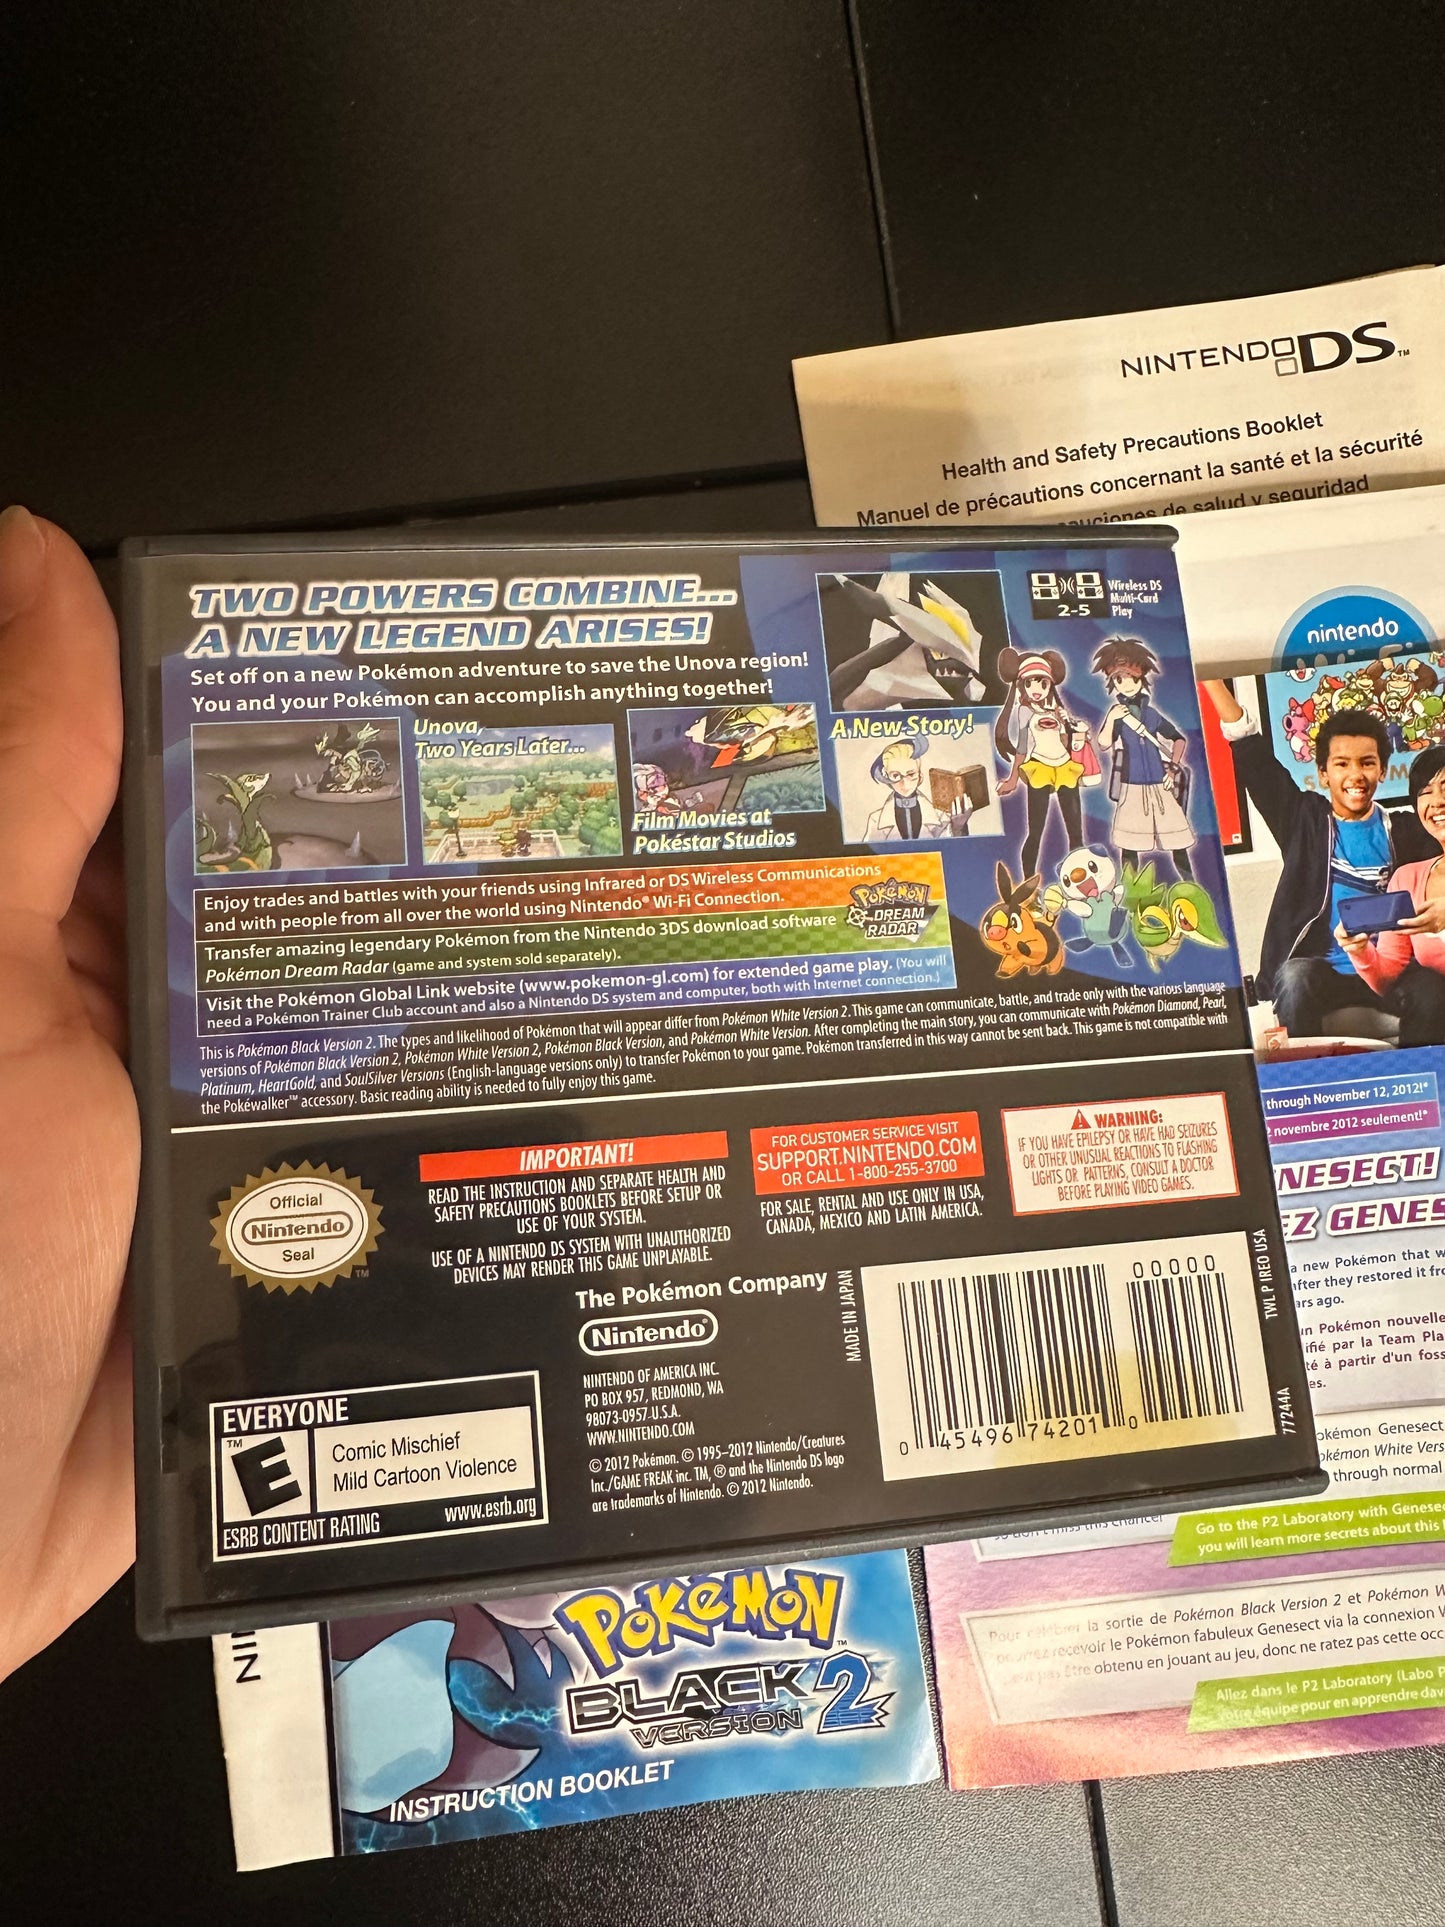 Pokémon Black 2 Case Manual Inserts Only No Game